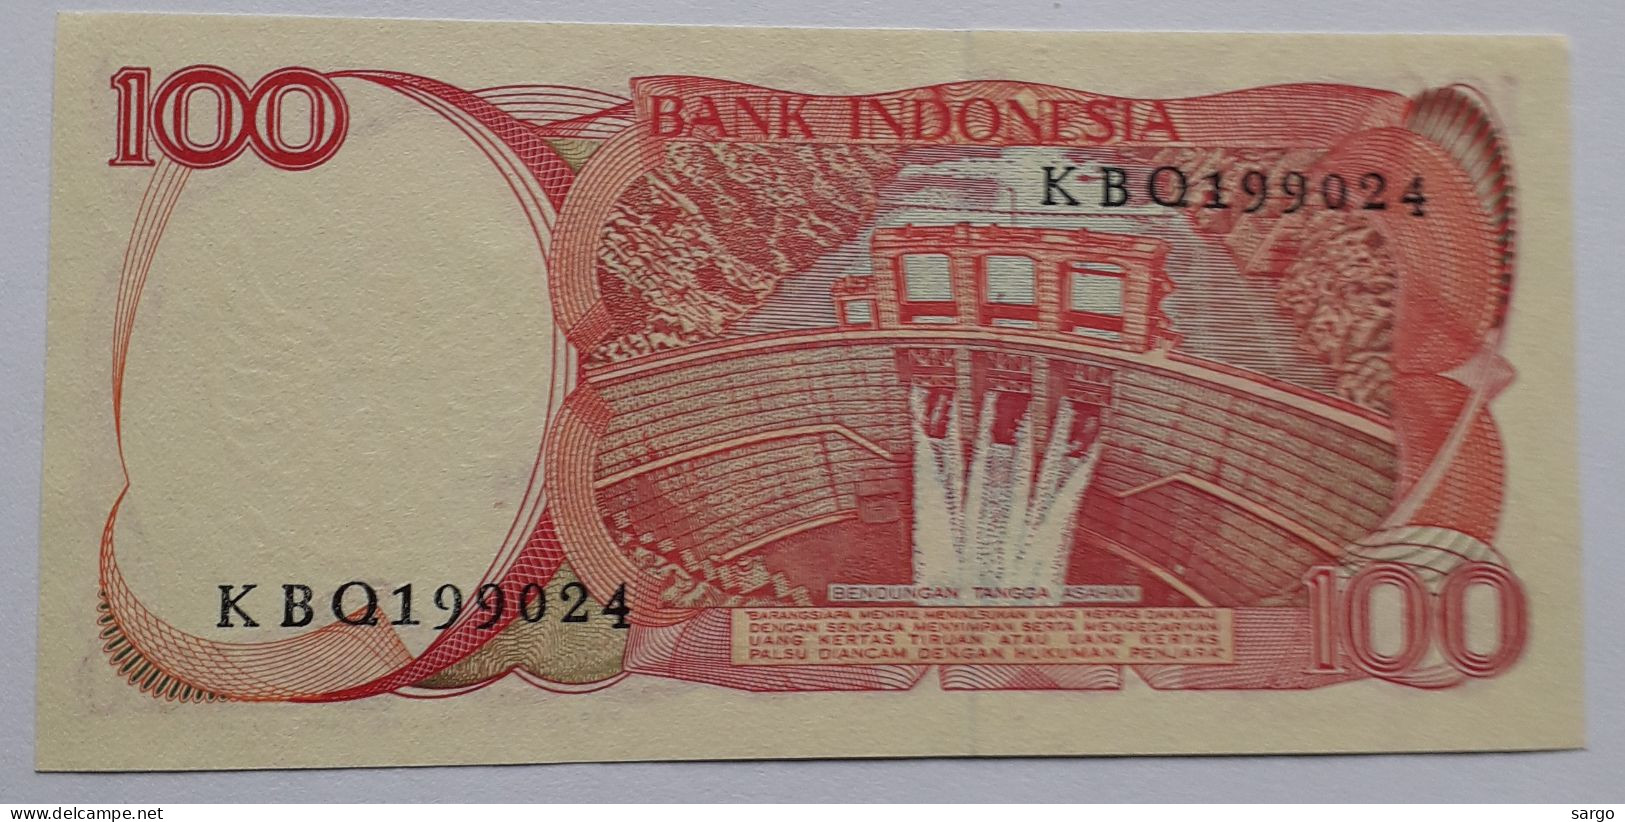 INDONEASIA - 100 RUPIAH - P 122 (1984) - UNCIRC - BANKNOTES - PAPER MONEY - CARTAMONETA - - Indonésie